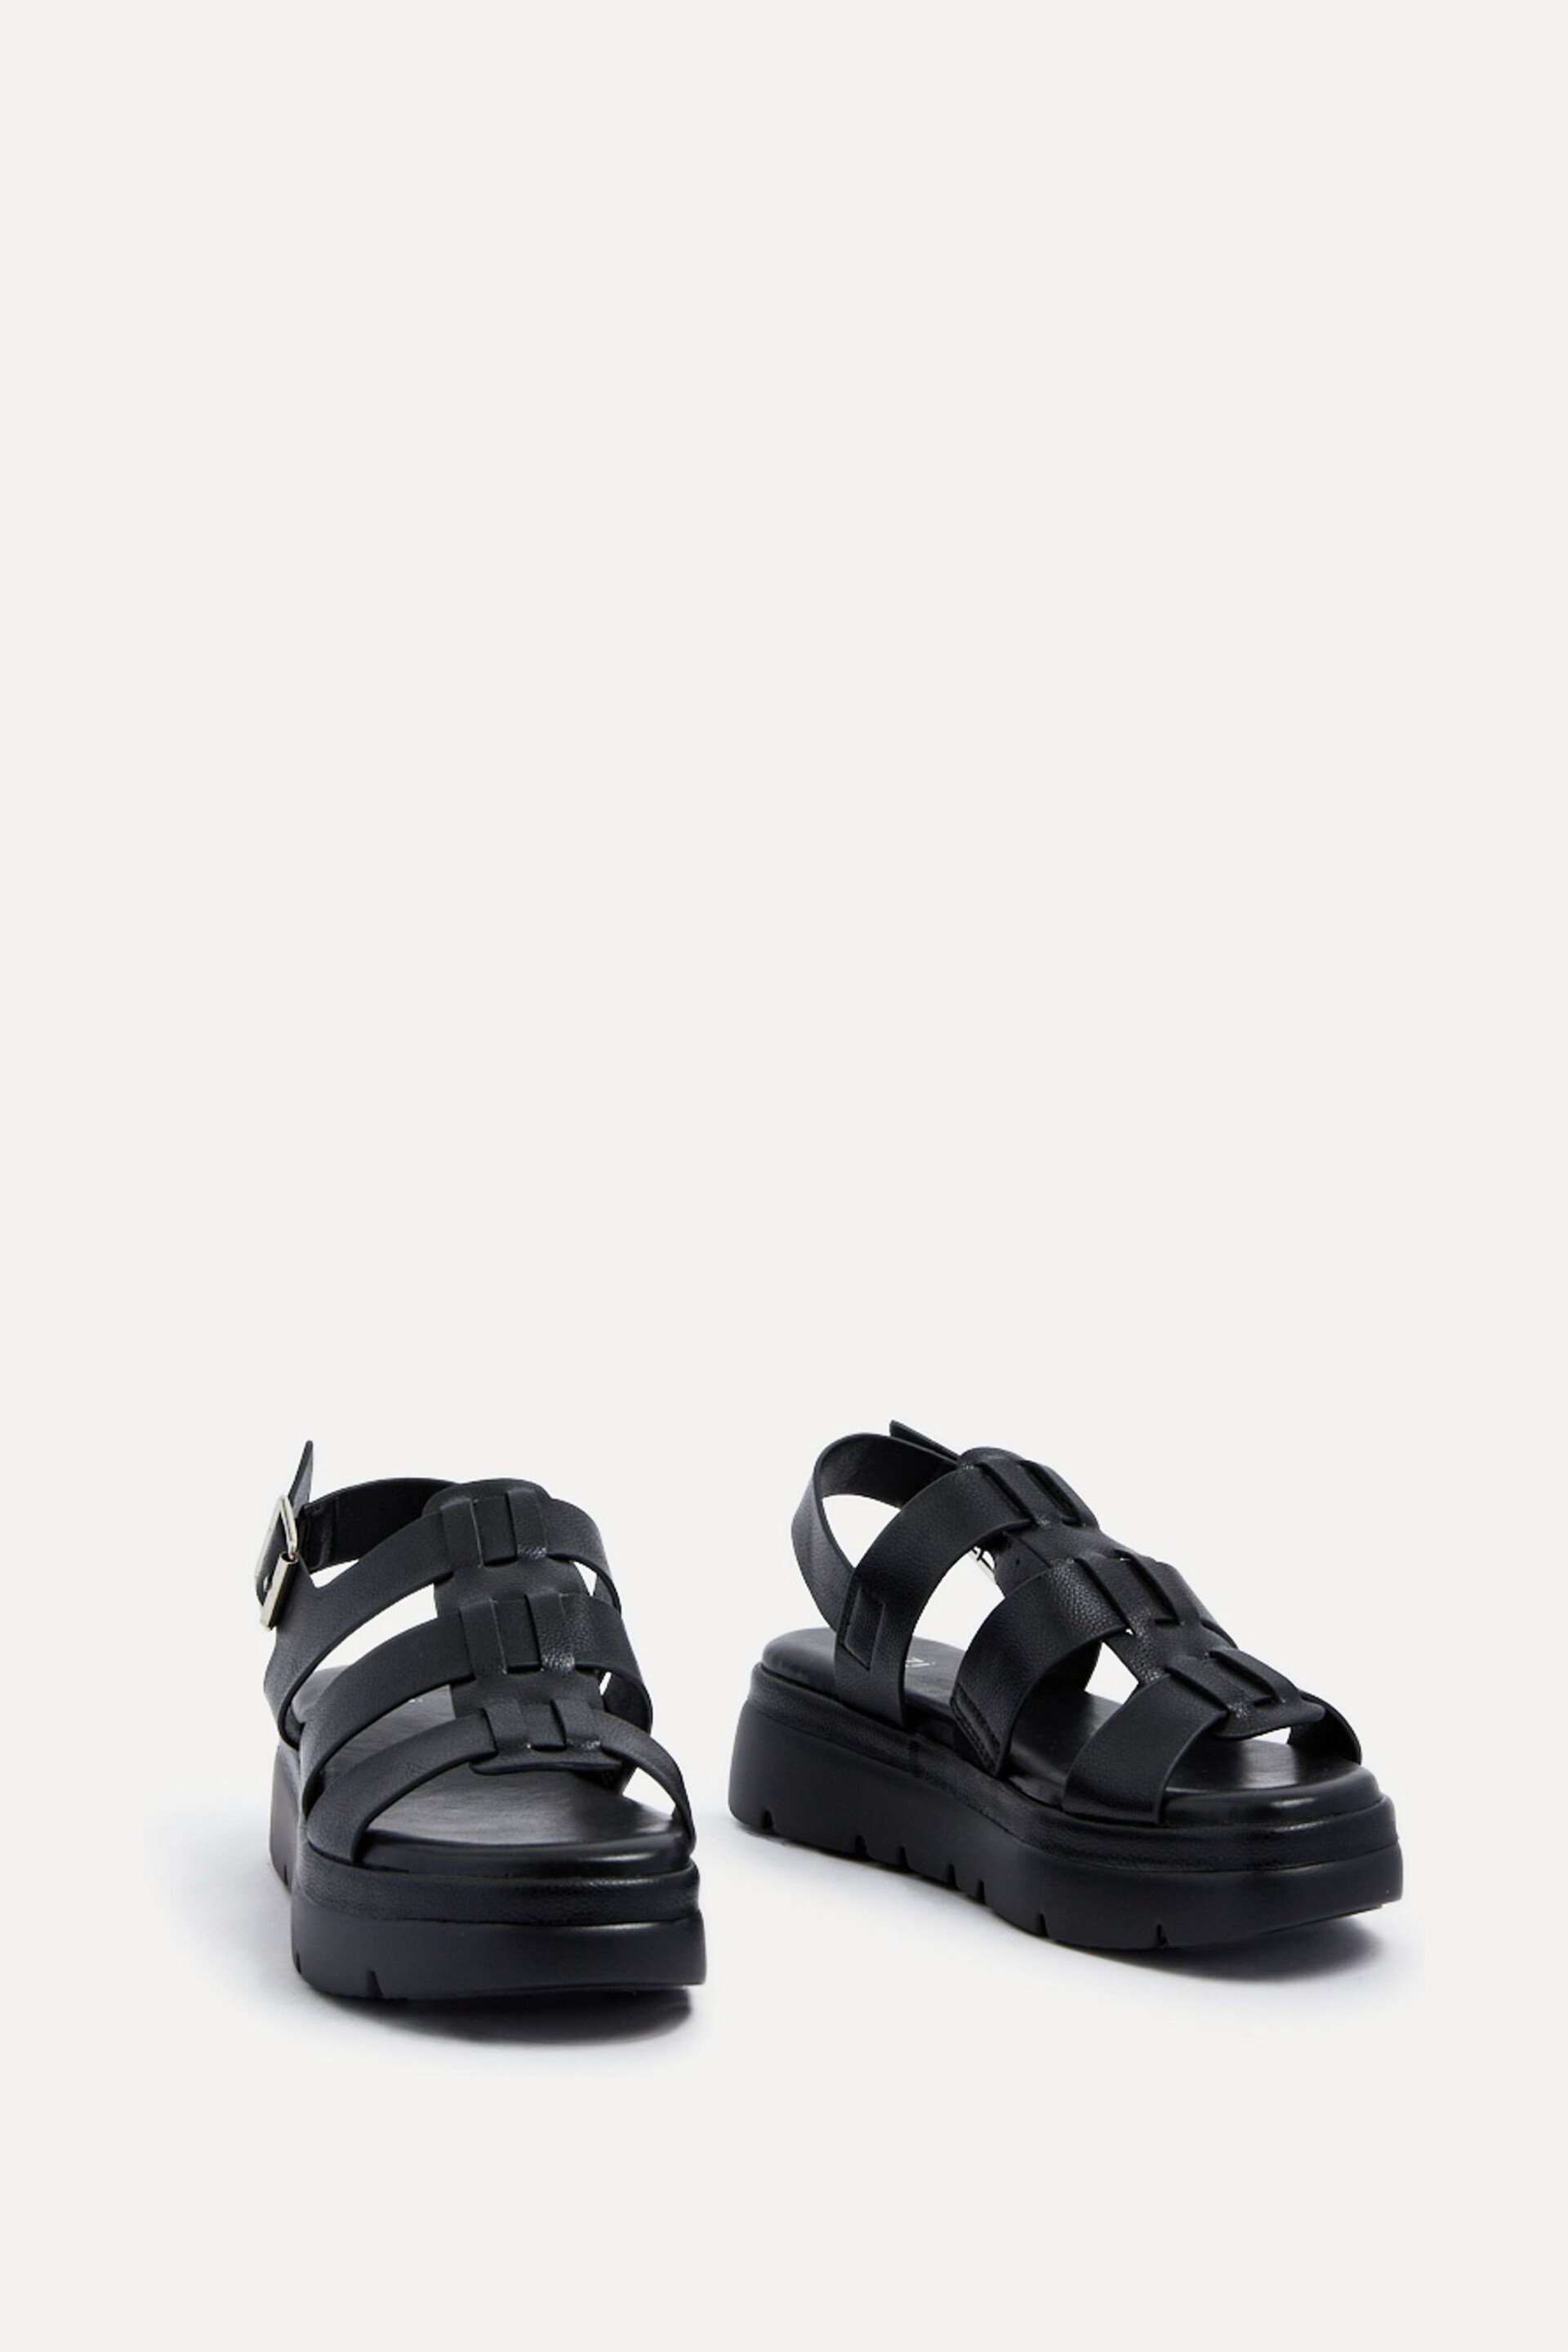 Linzi Black Boston Slingback Gladiator Sandals - Image 3 of 5